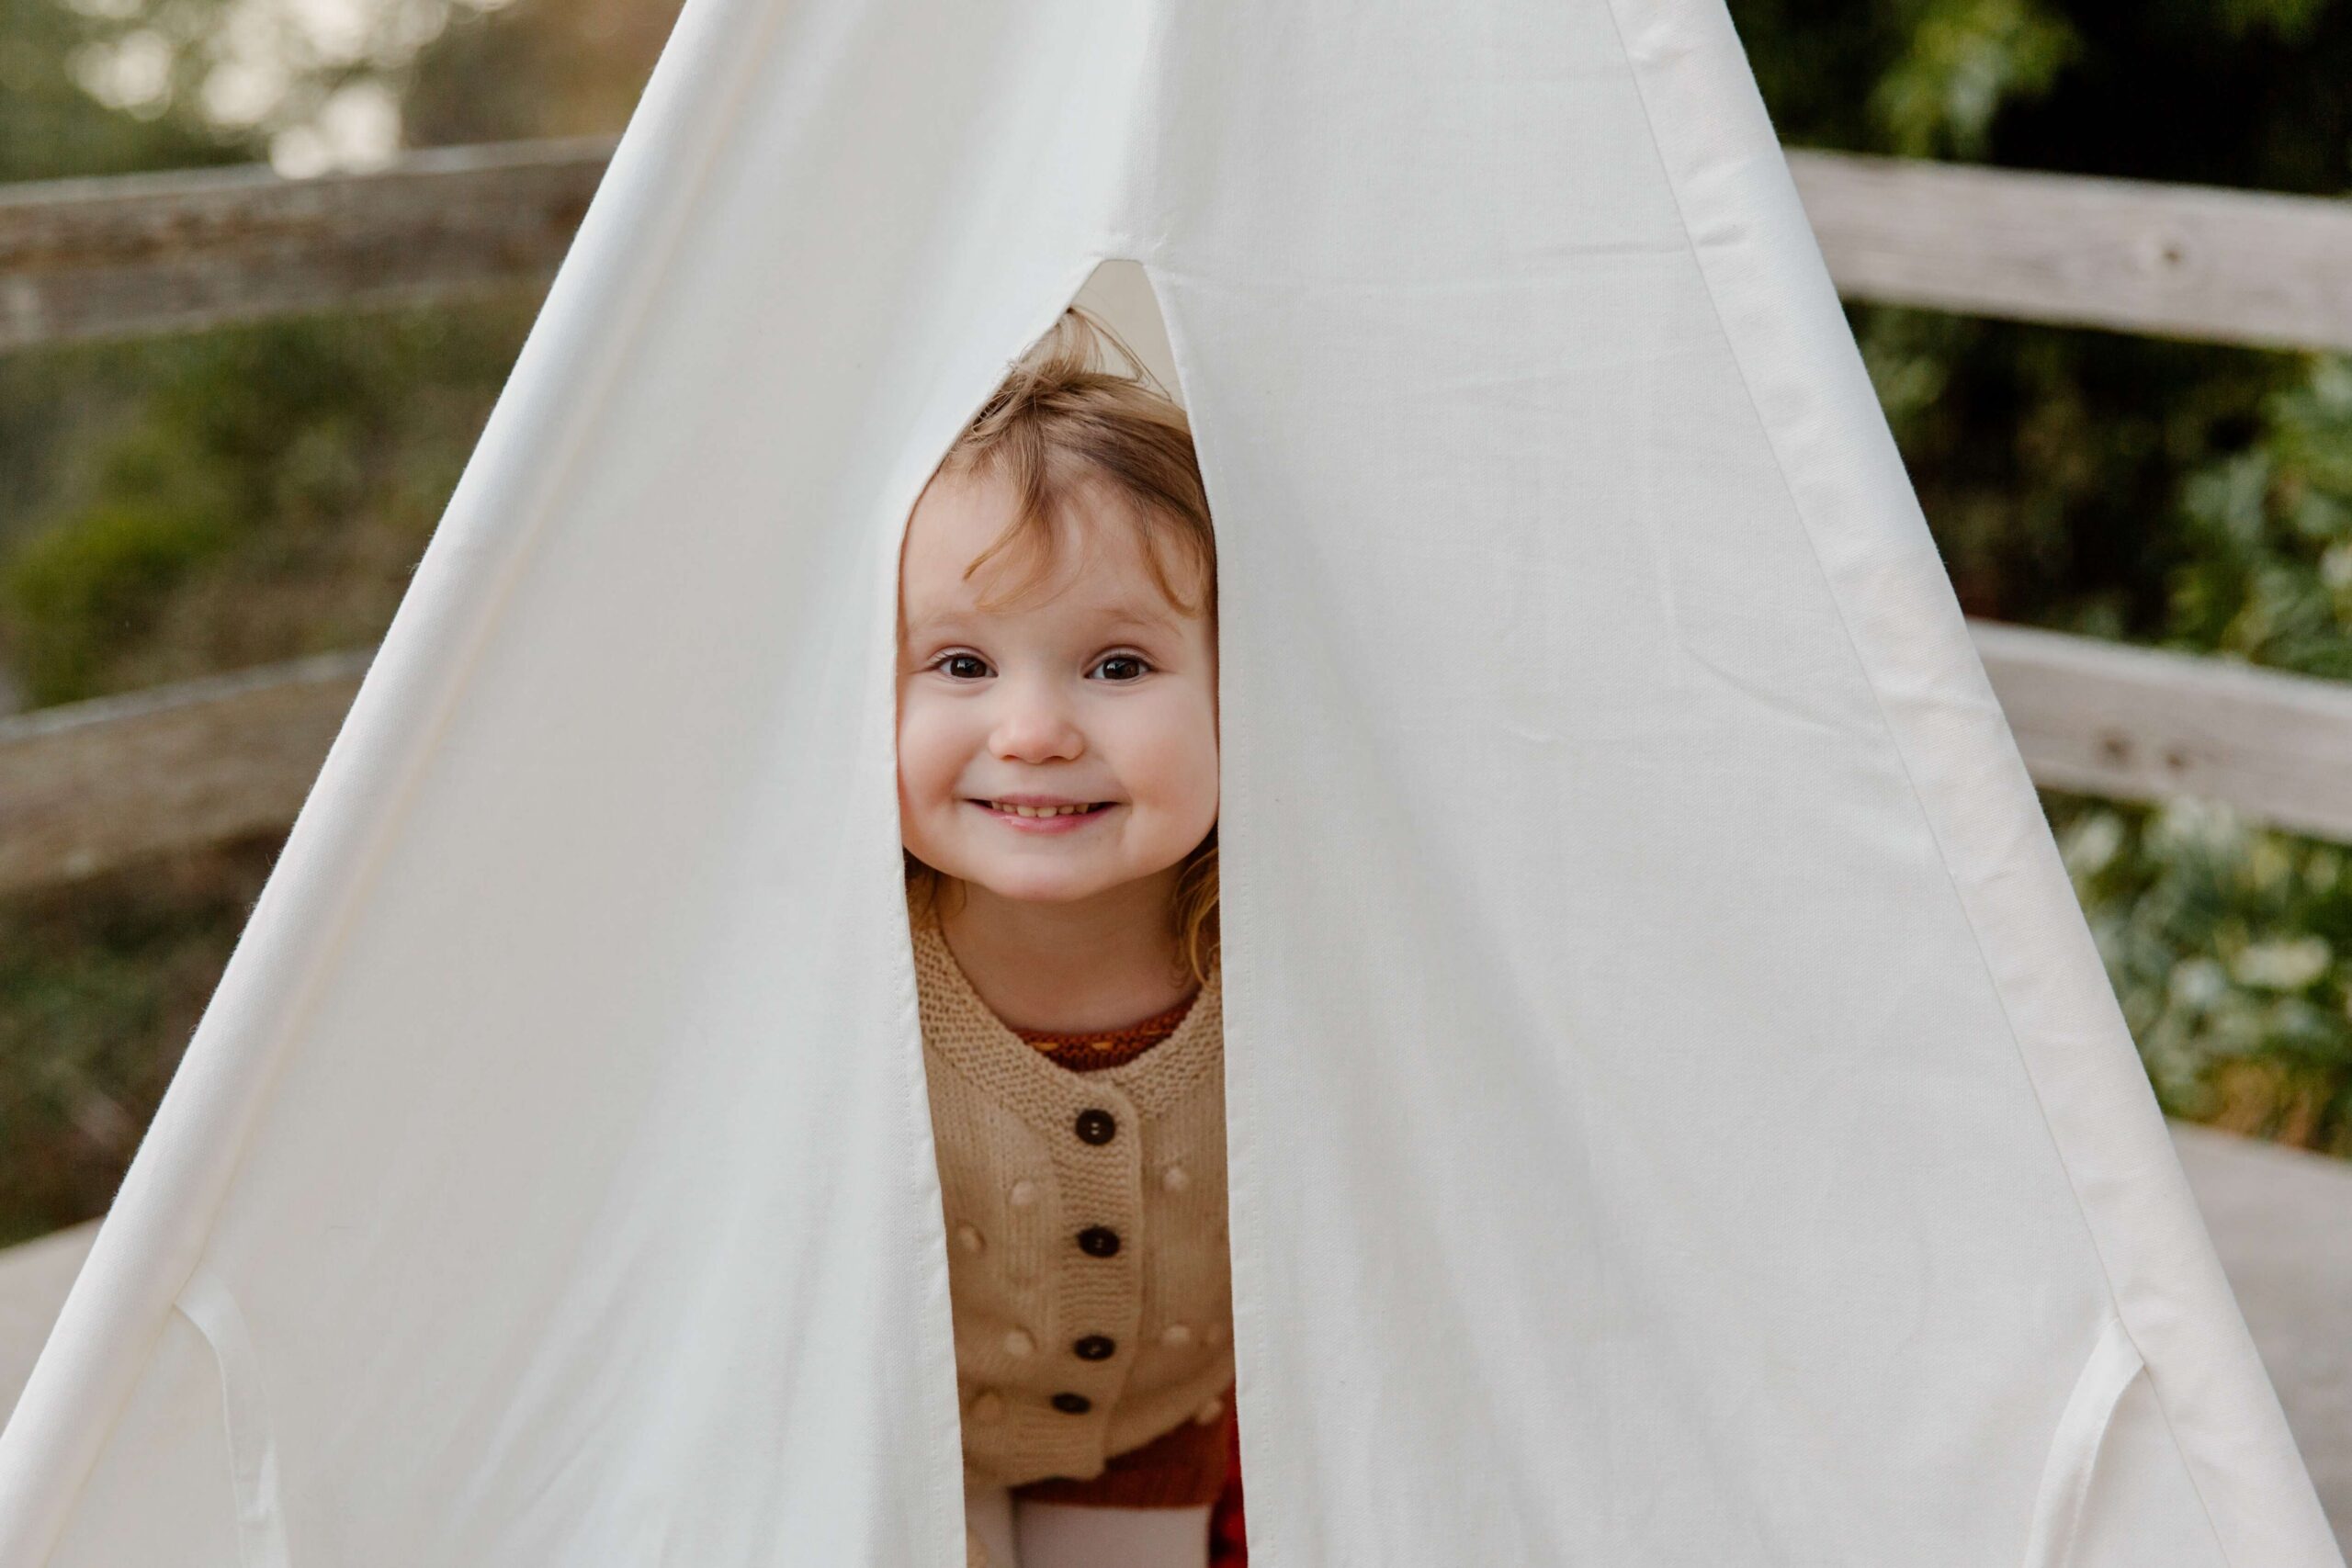 Happy child peeking from tent